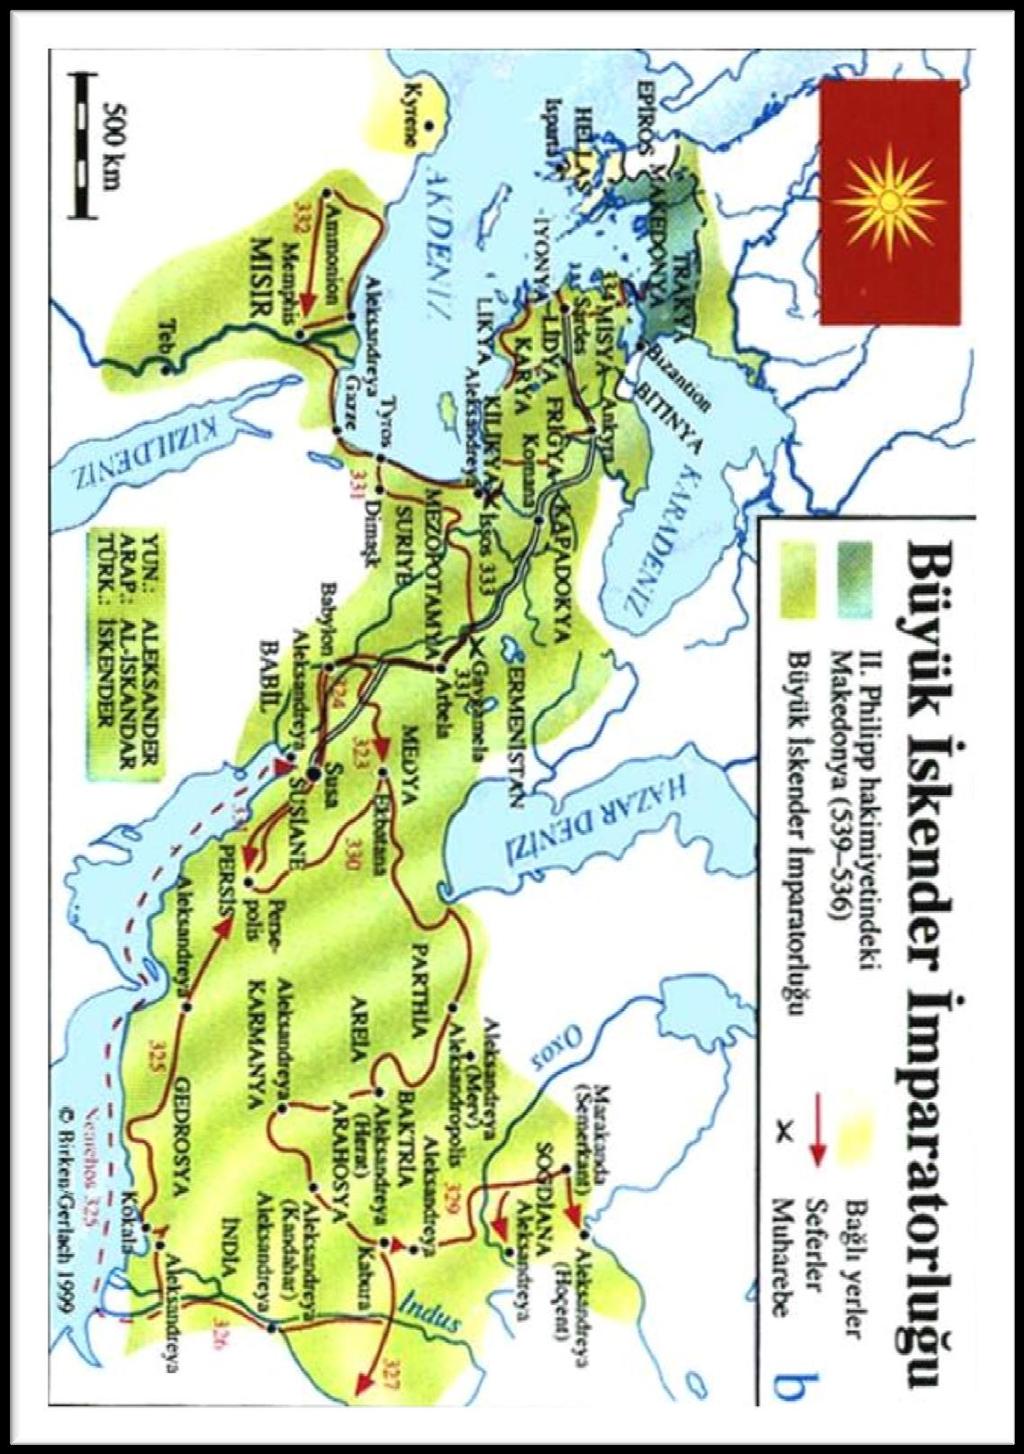 Harita 1: İskender İmparatorluğu Haritası. https://www.google.com.